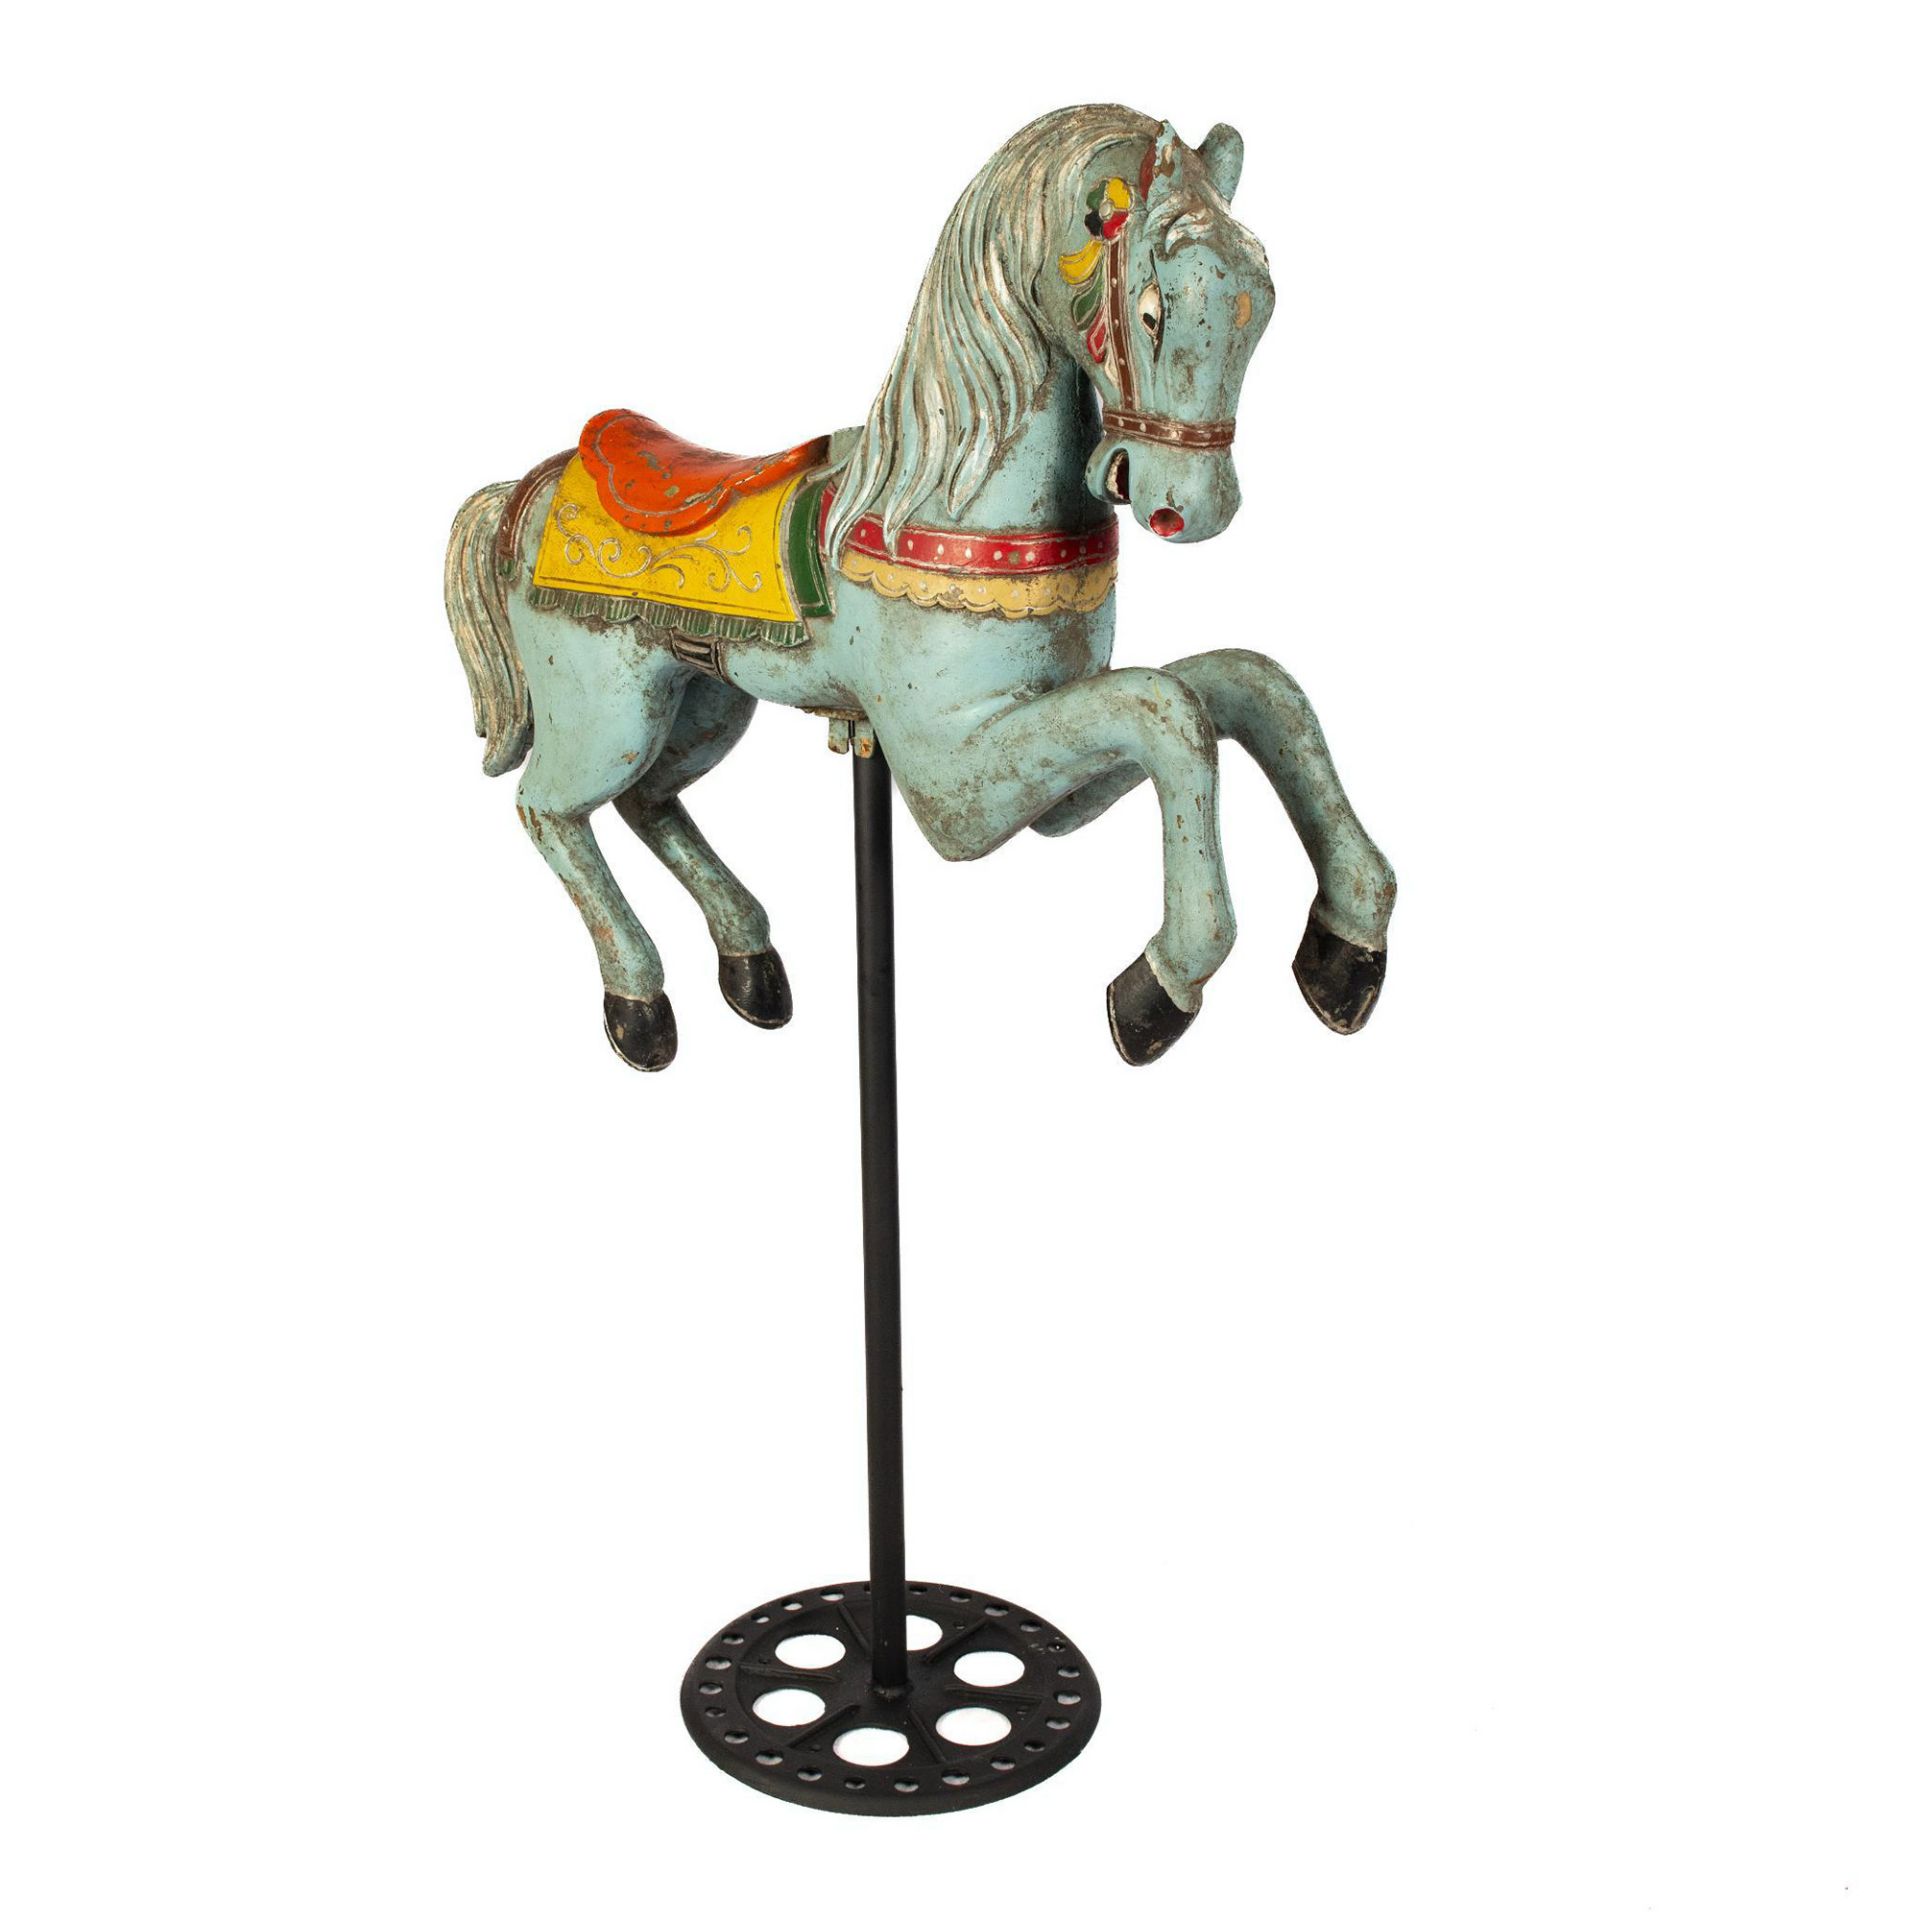 Antique Carnival Fiberglass Carousel Horse - Image 2 of 6